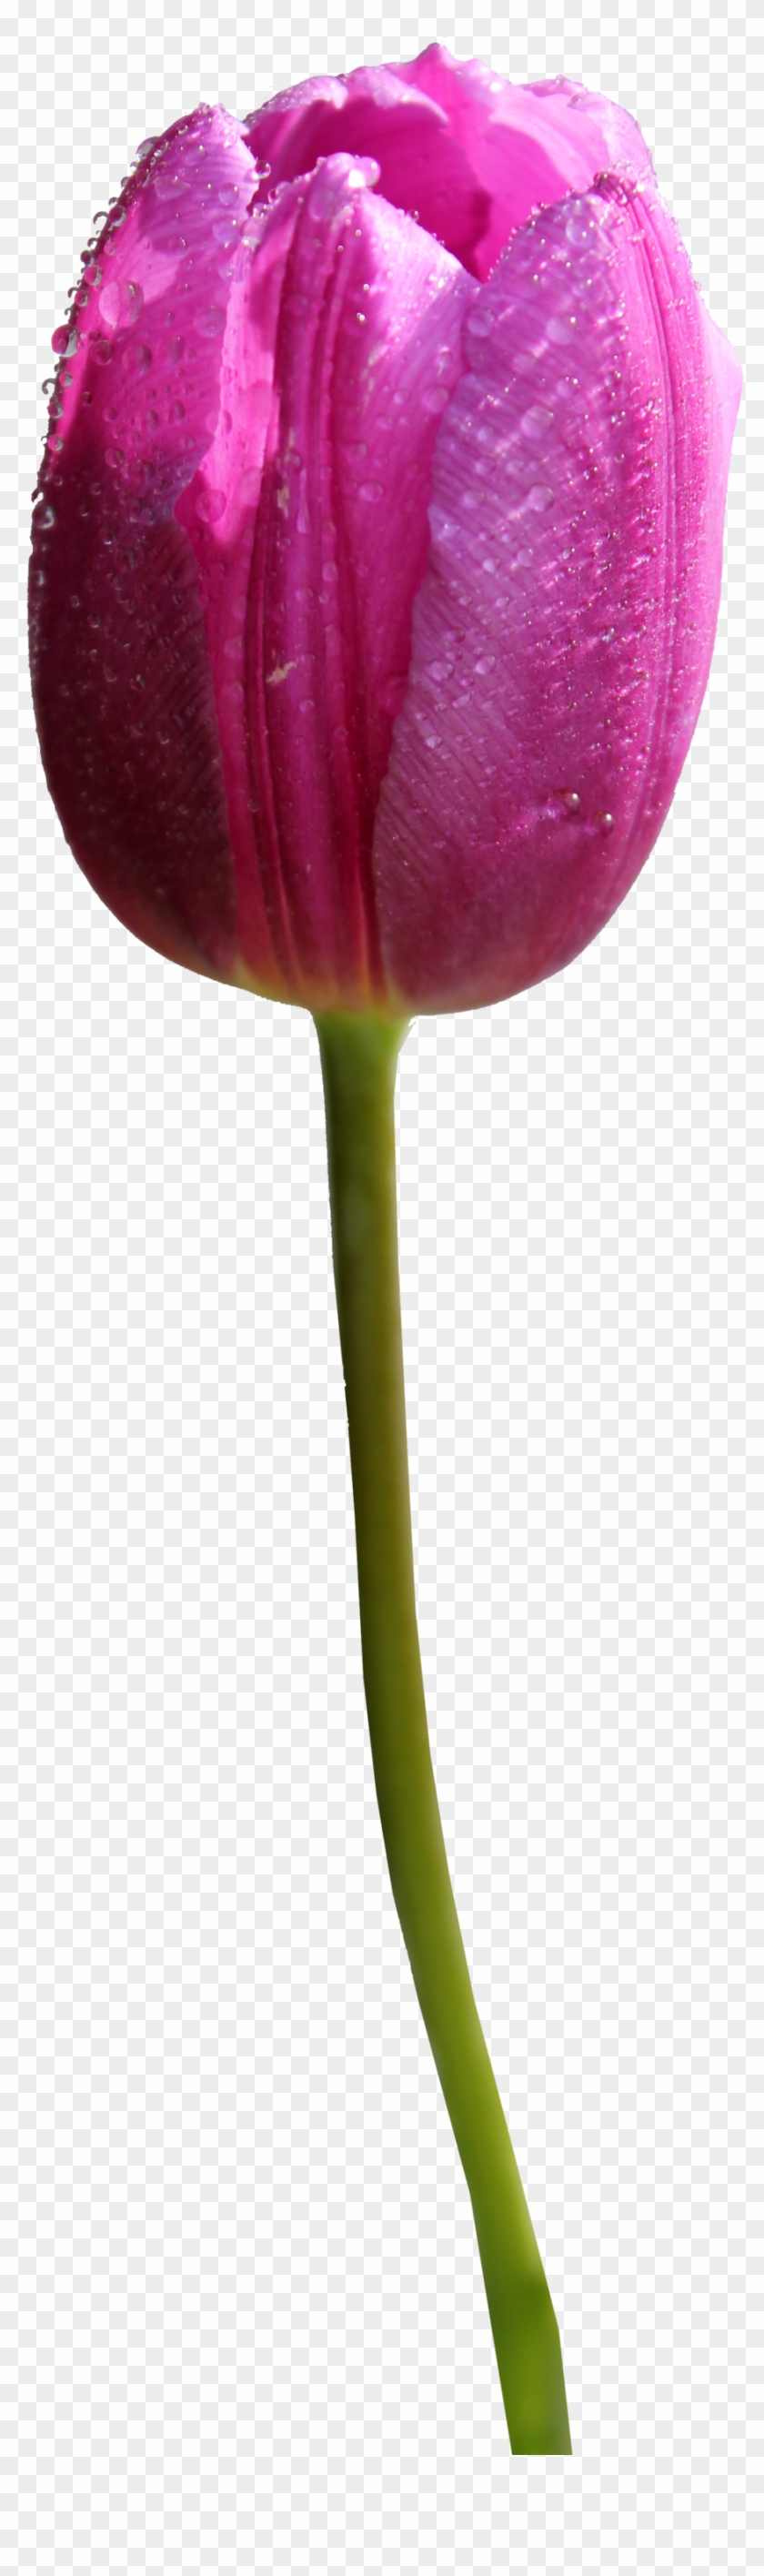 Tulip Png Hd - Tulip Flower Transparent #310305